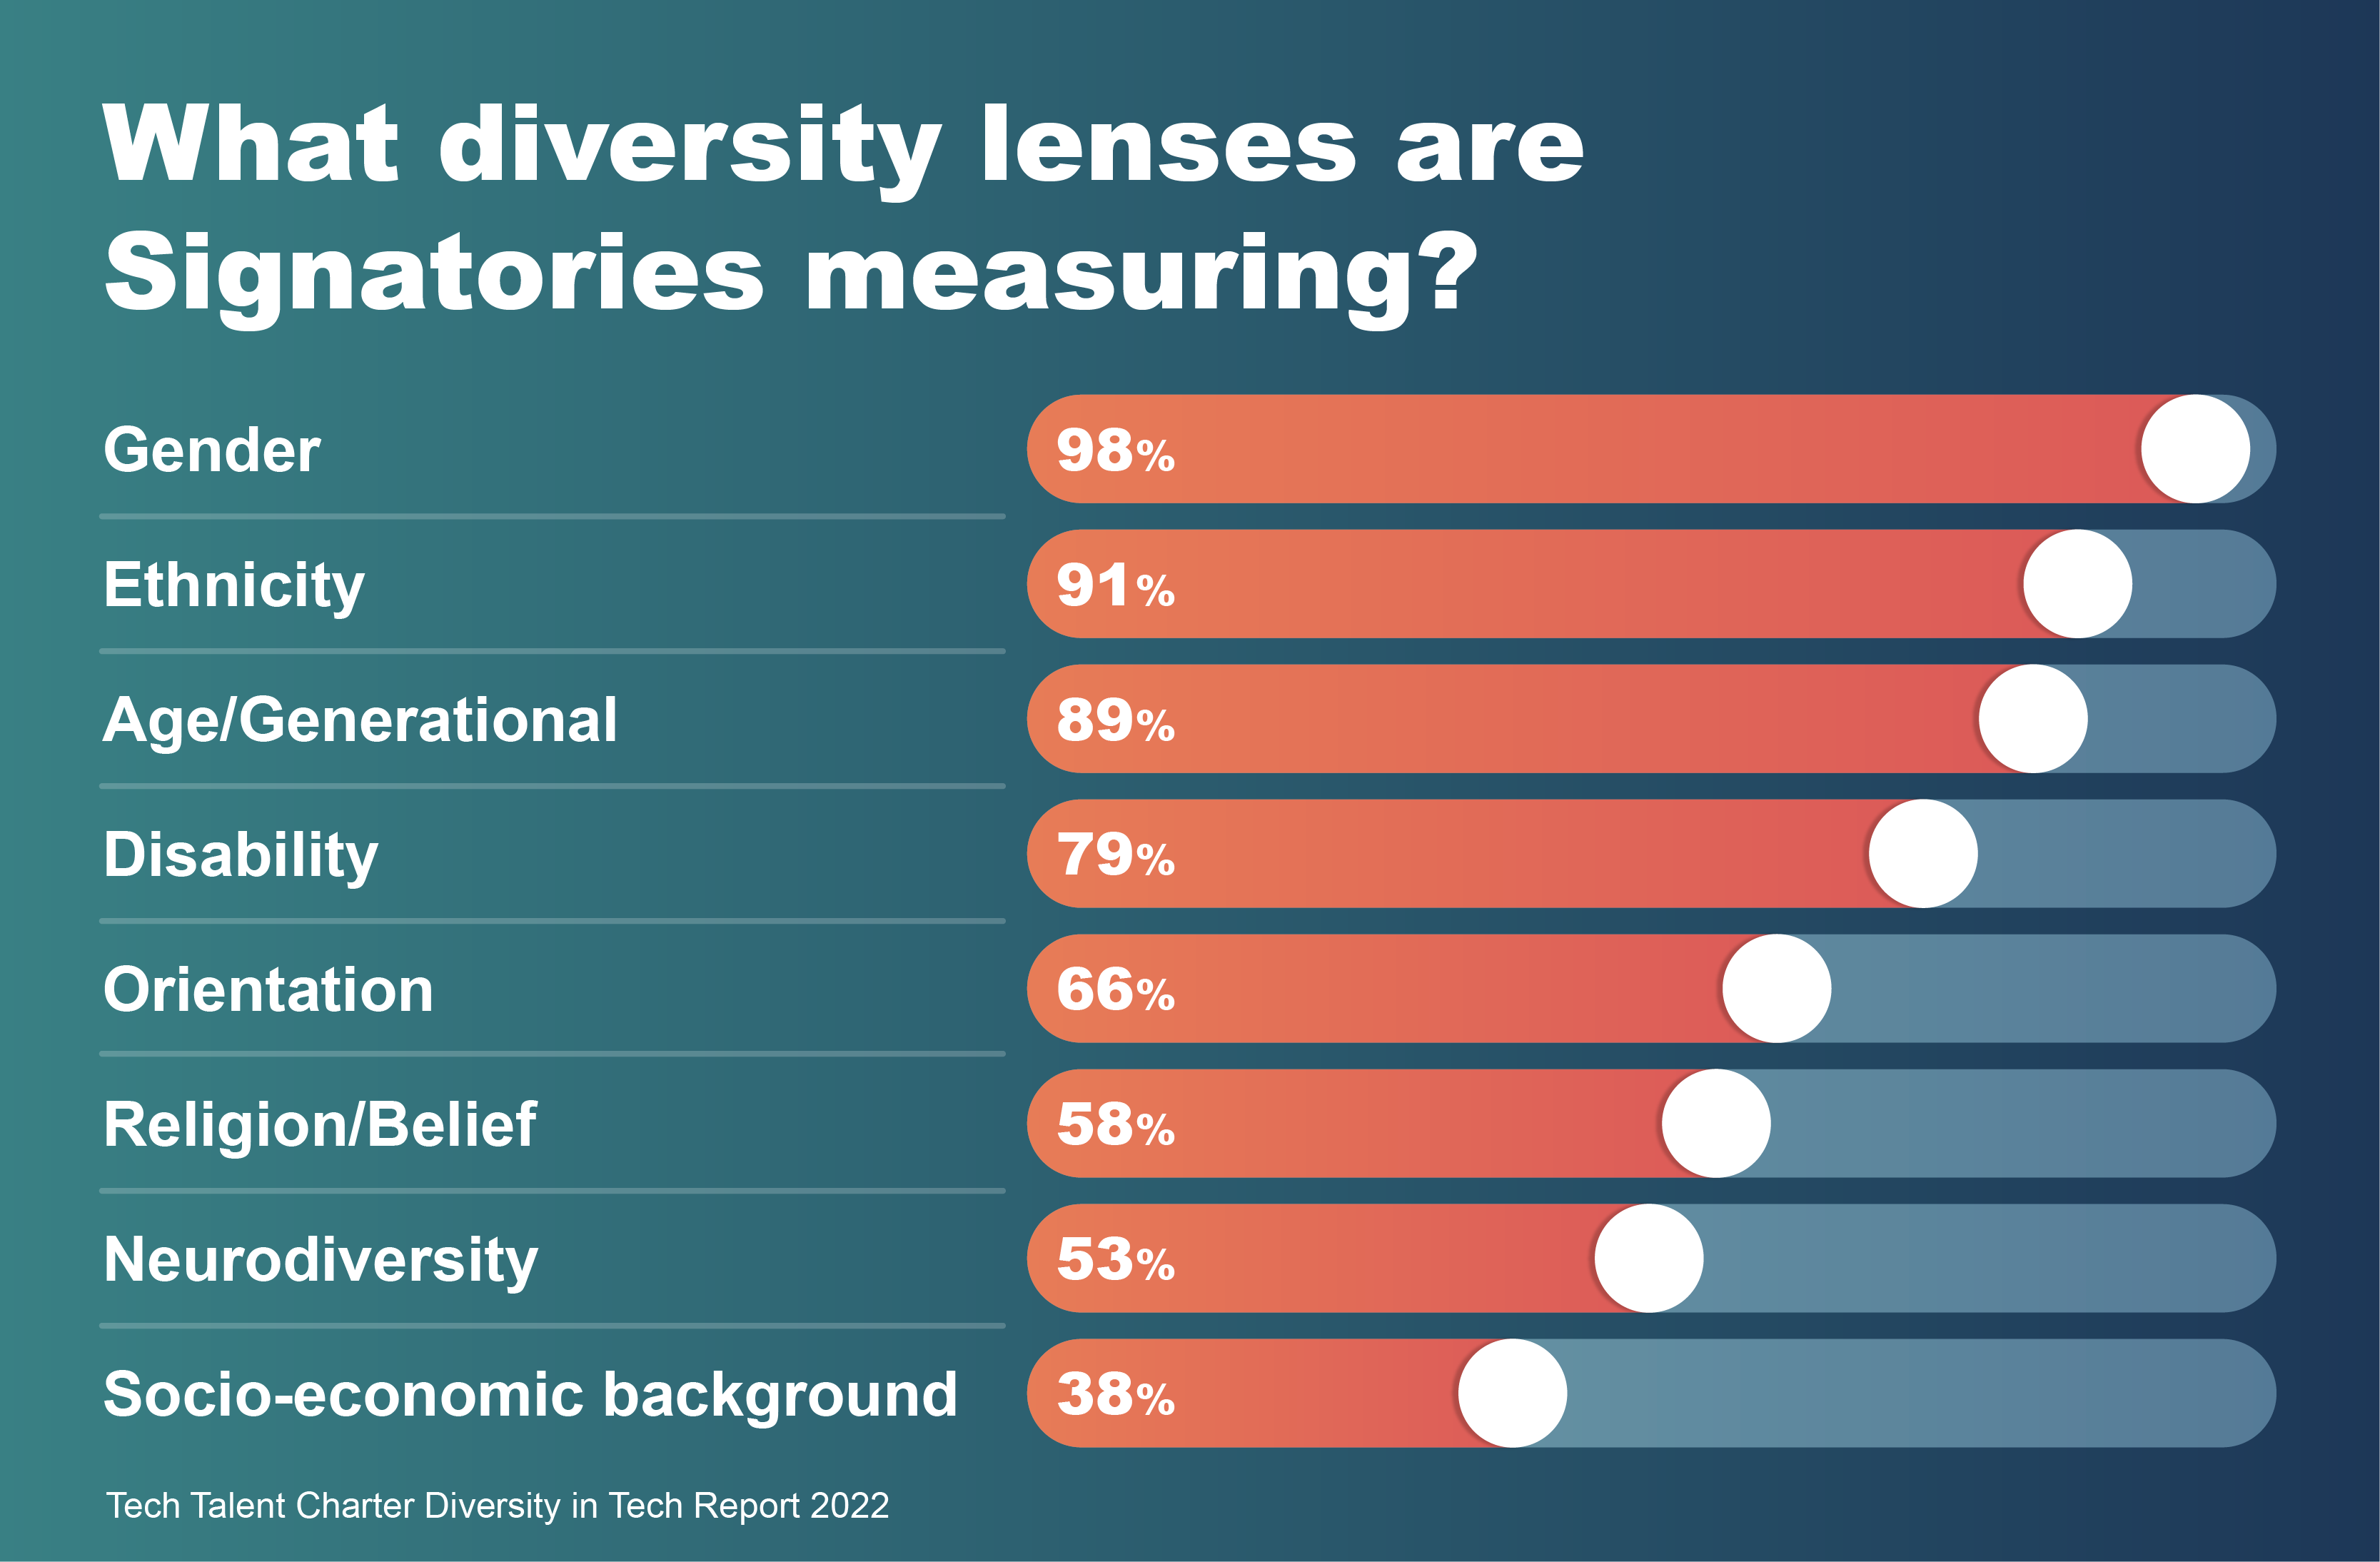 Diversity lenses that Signatories are measuring